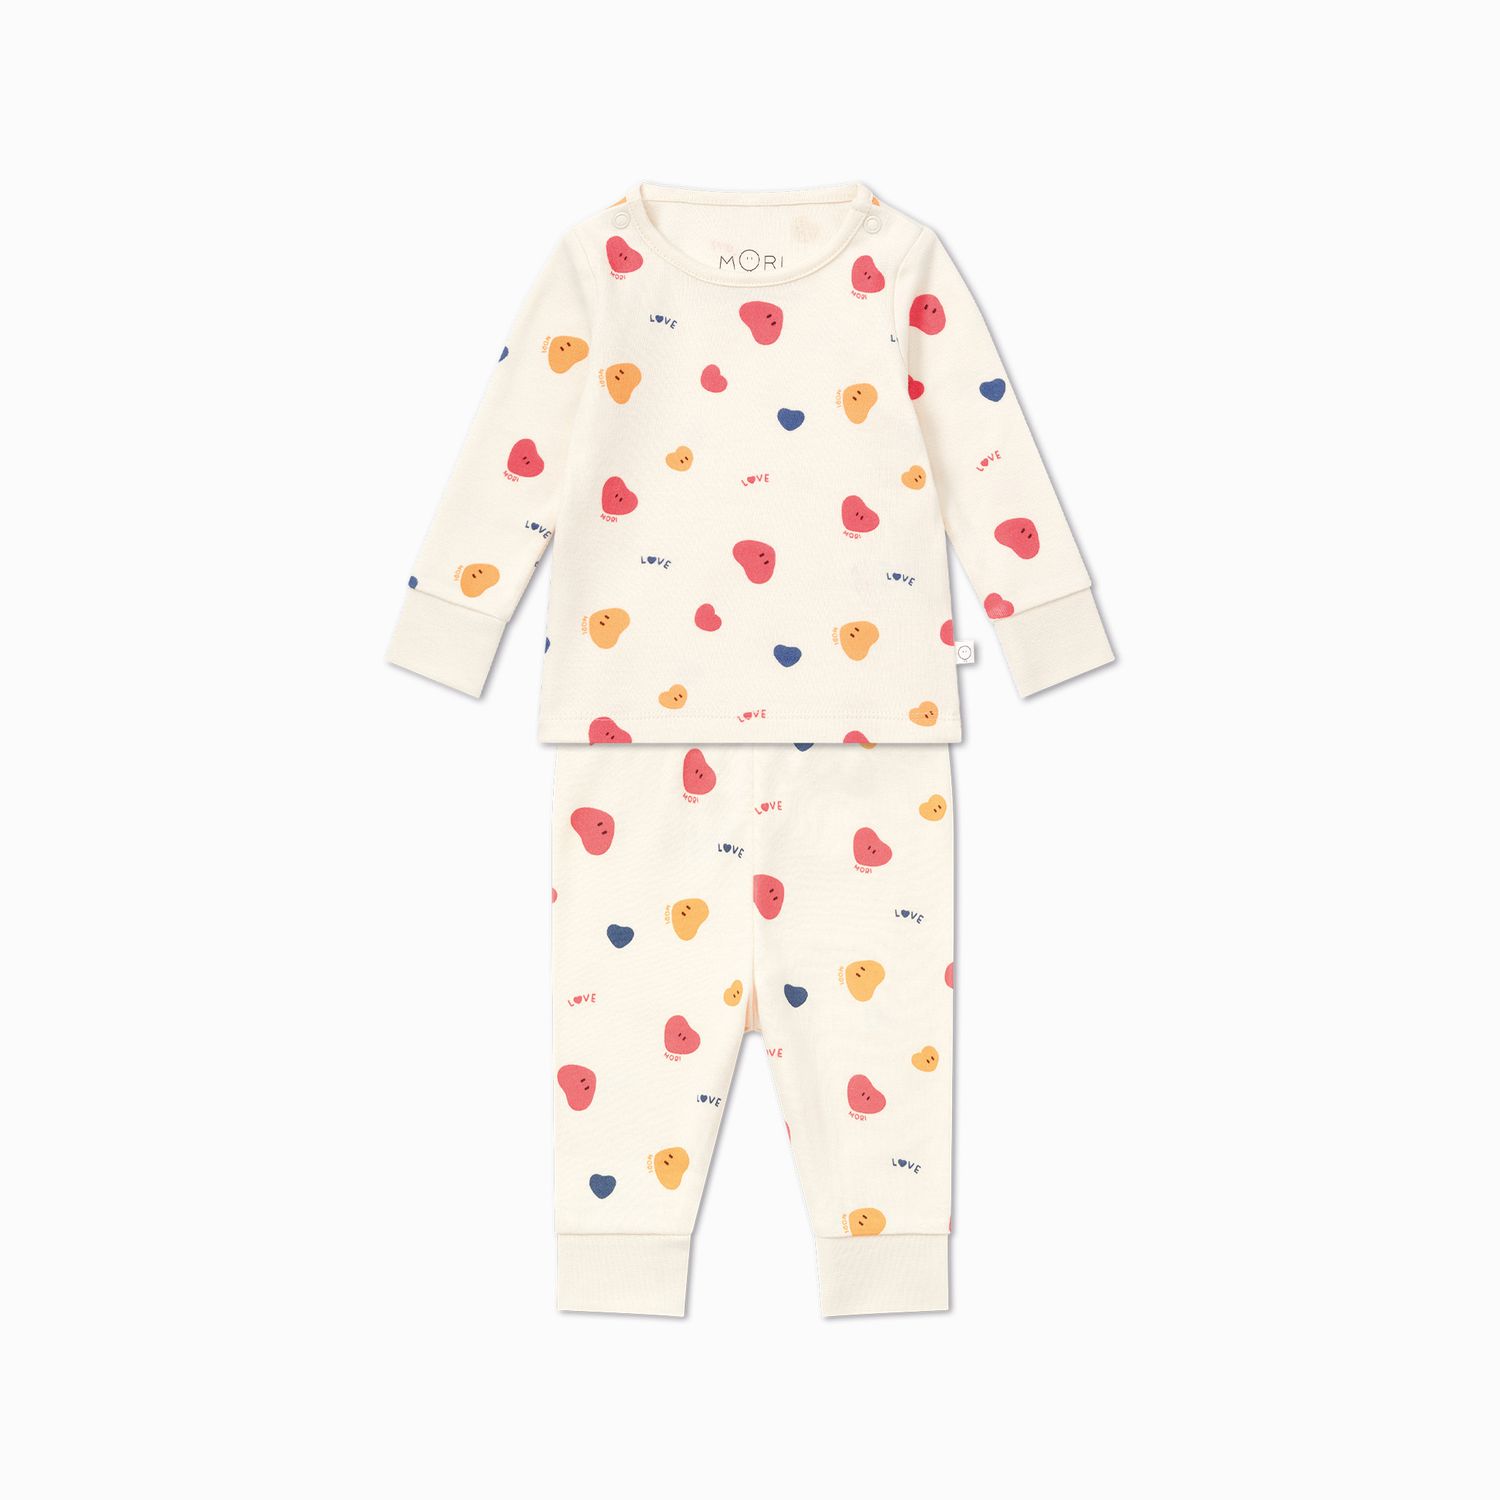 Mori Heart Print Pajama Set https://us.babymori.com/products/heart-print-pajama-set?variant=40388469620849